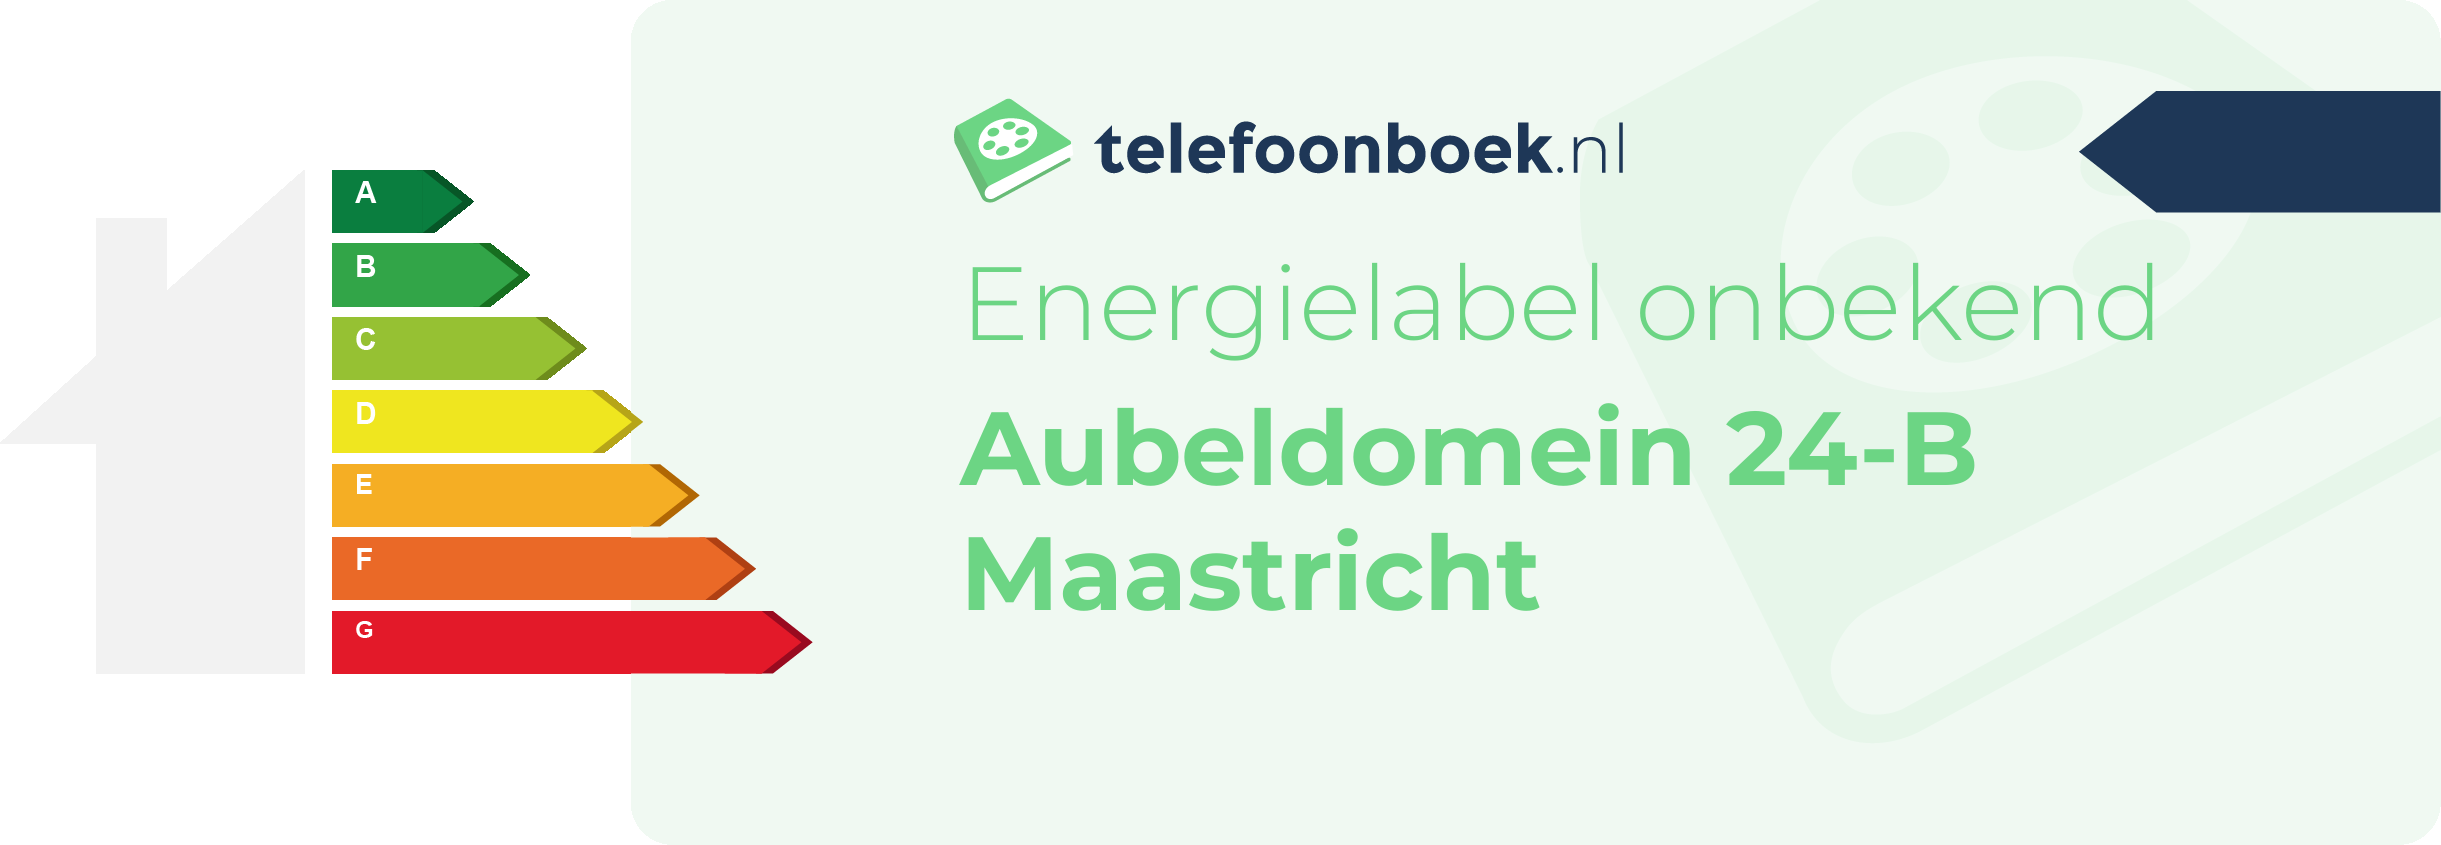 Energielabel Aubeldomein 24-B Maastricht